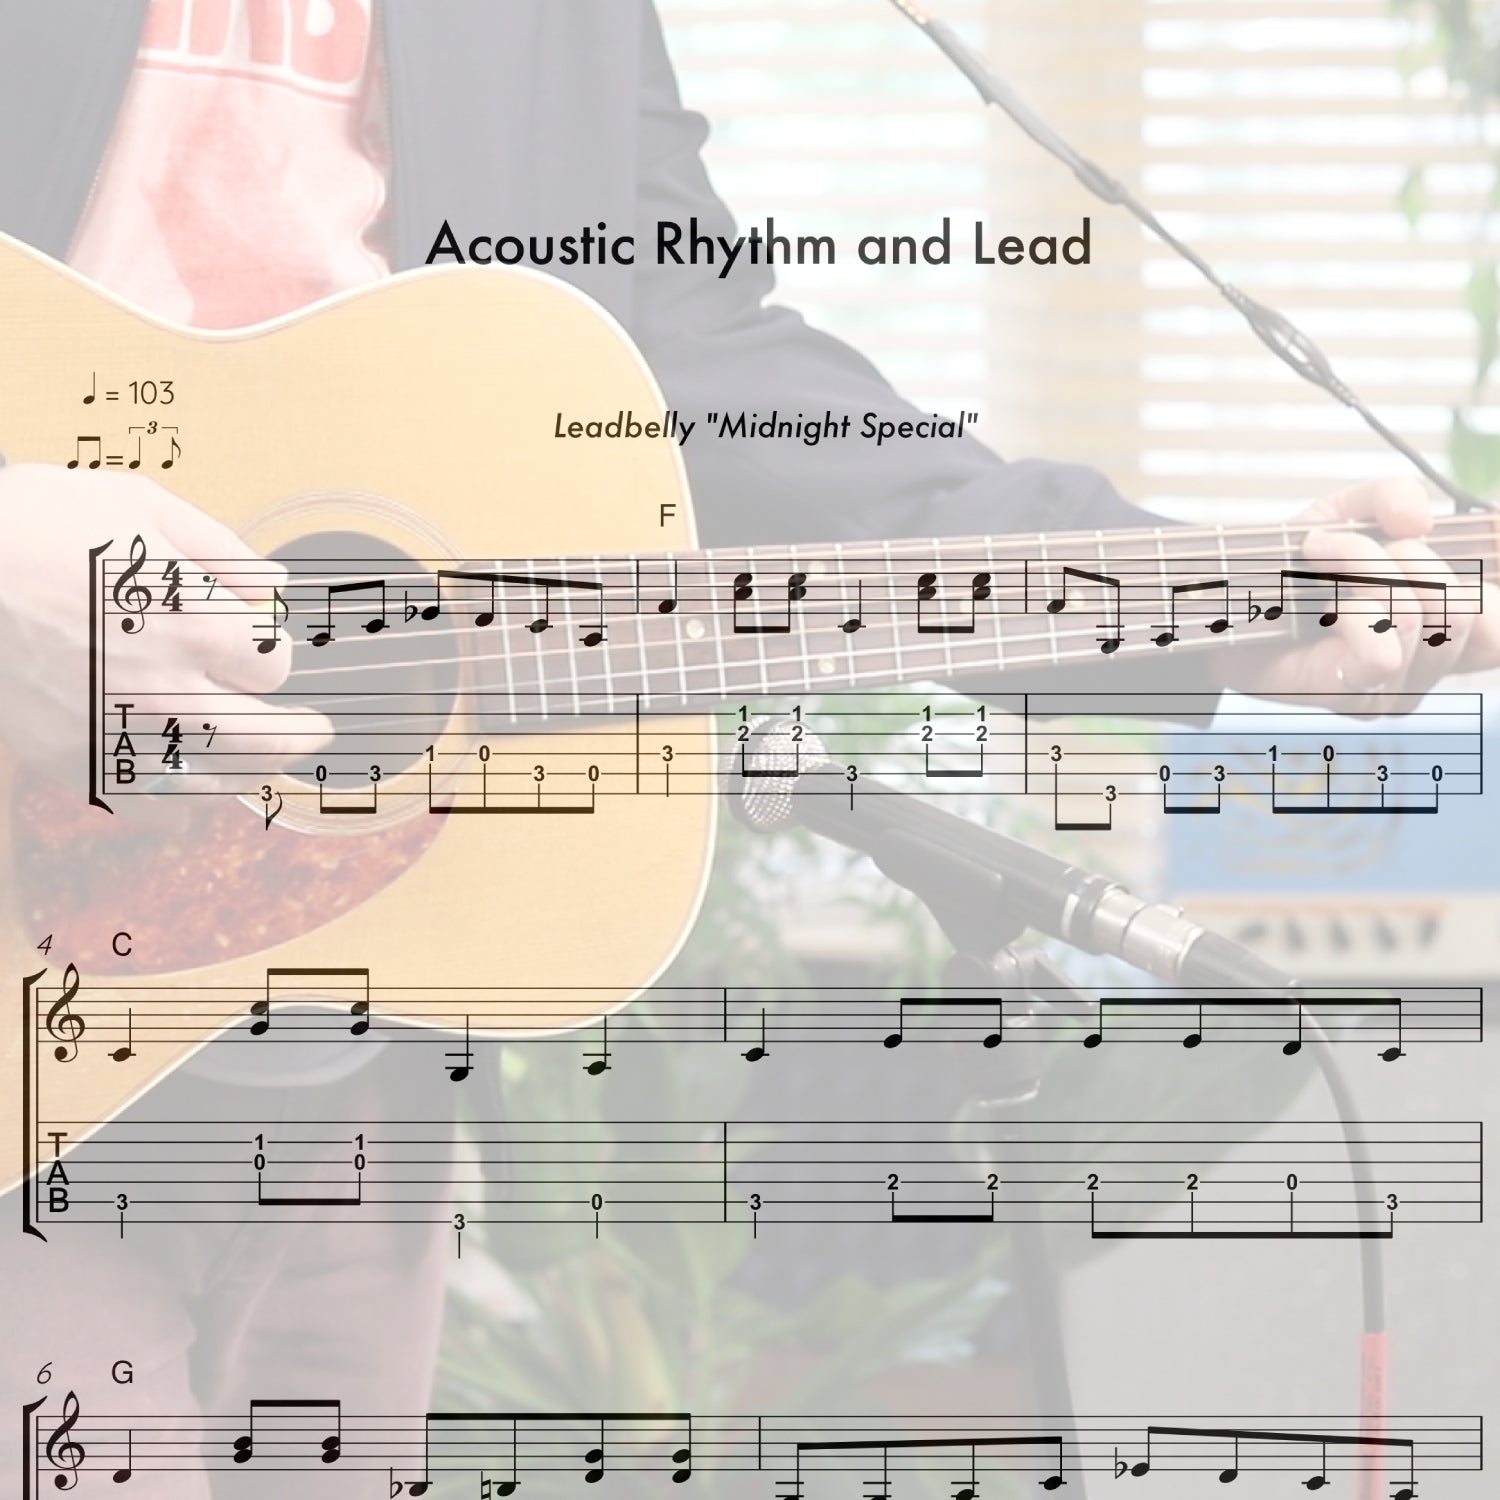 Acoustic Rhythm and Lead